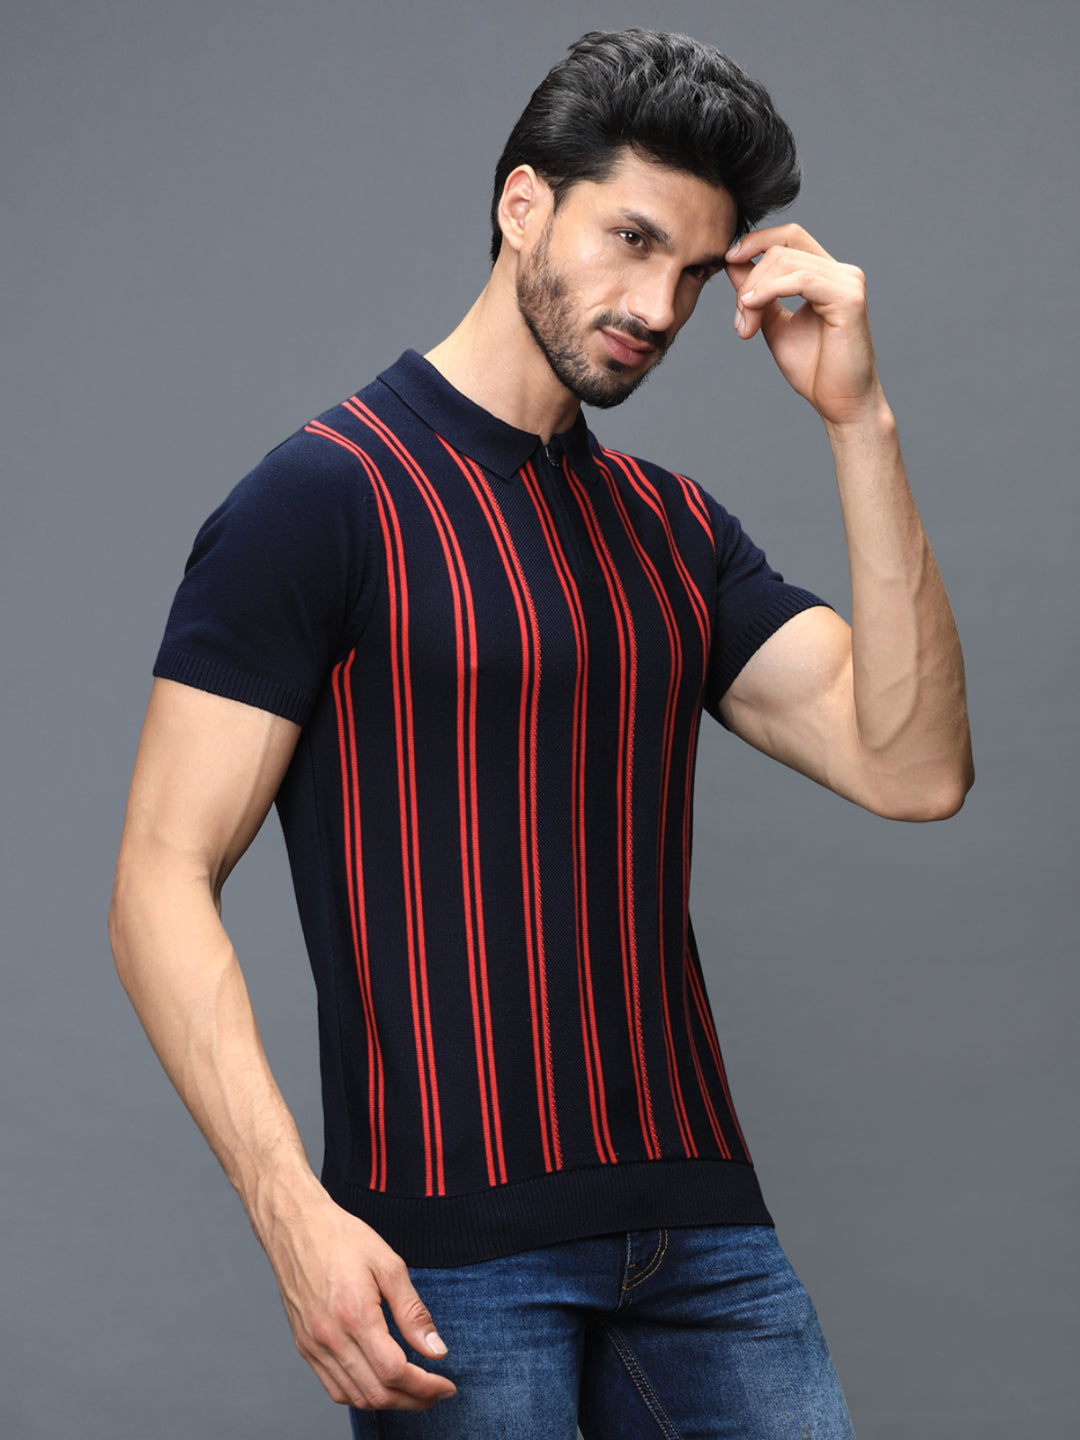 IDENTITI Men Flat Knit T-Shirt In Vertical Stripe